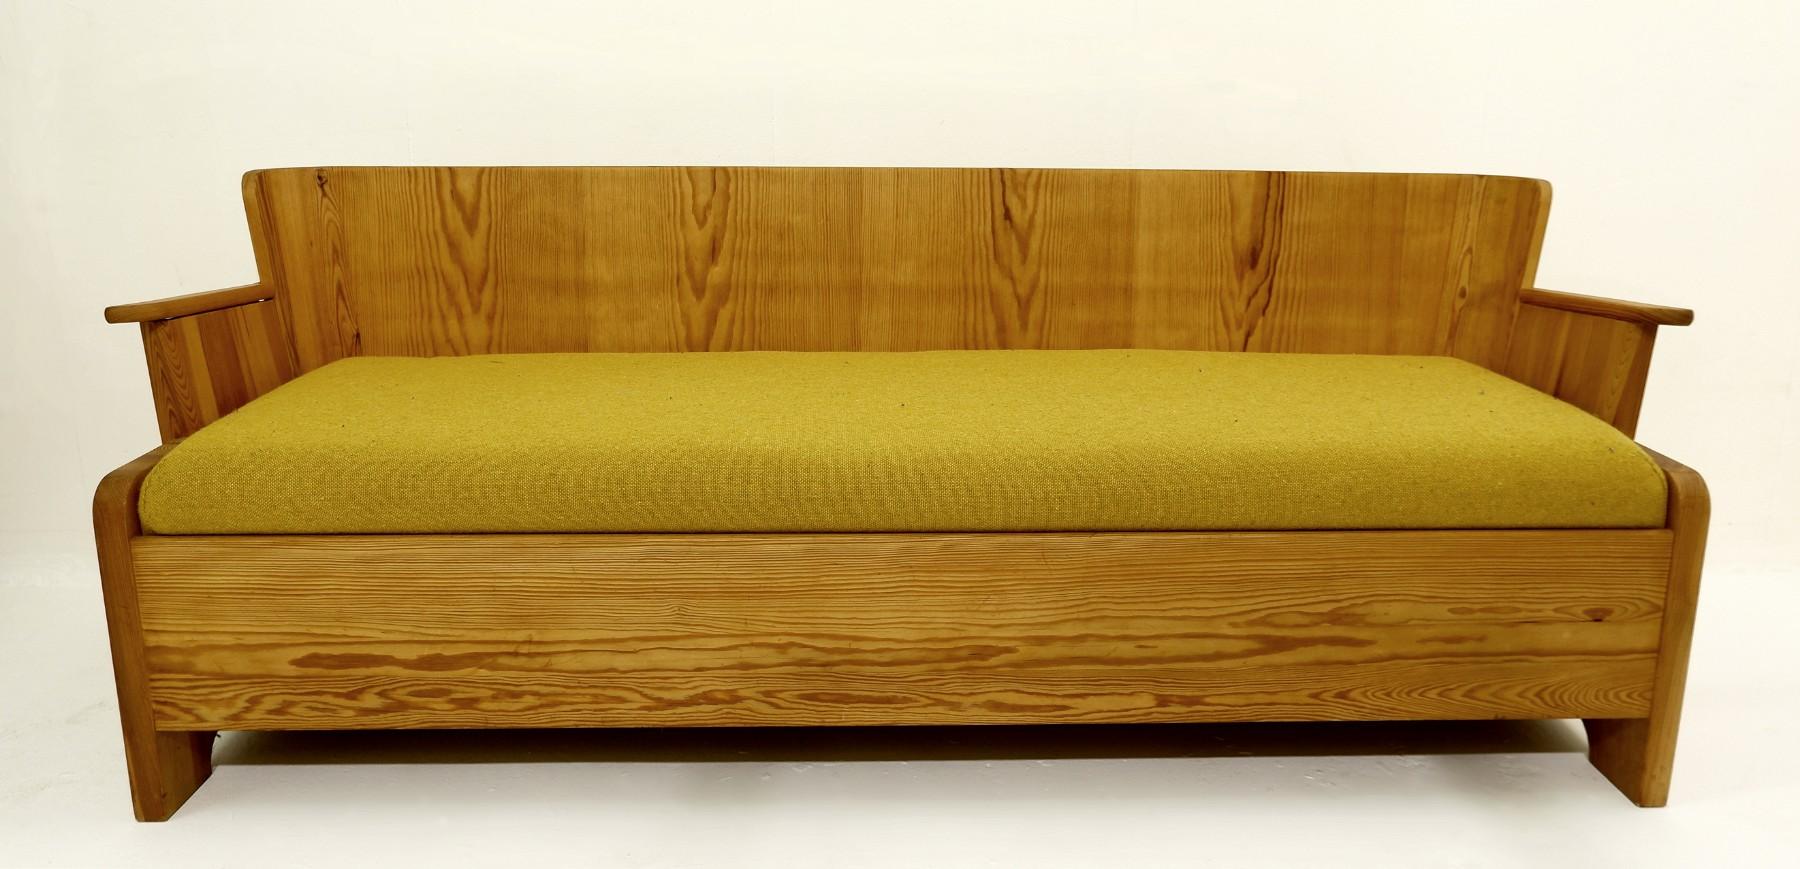 Pine sofa/bench by Göran Malmvall, Ed. Svensk, circa 1950.